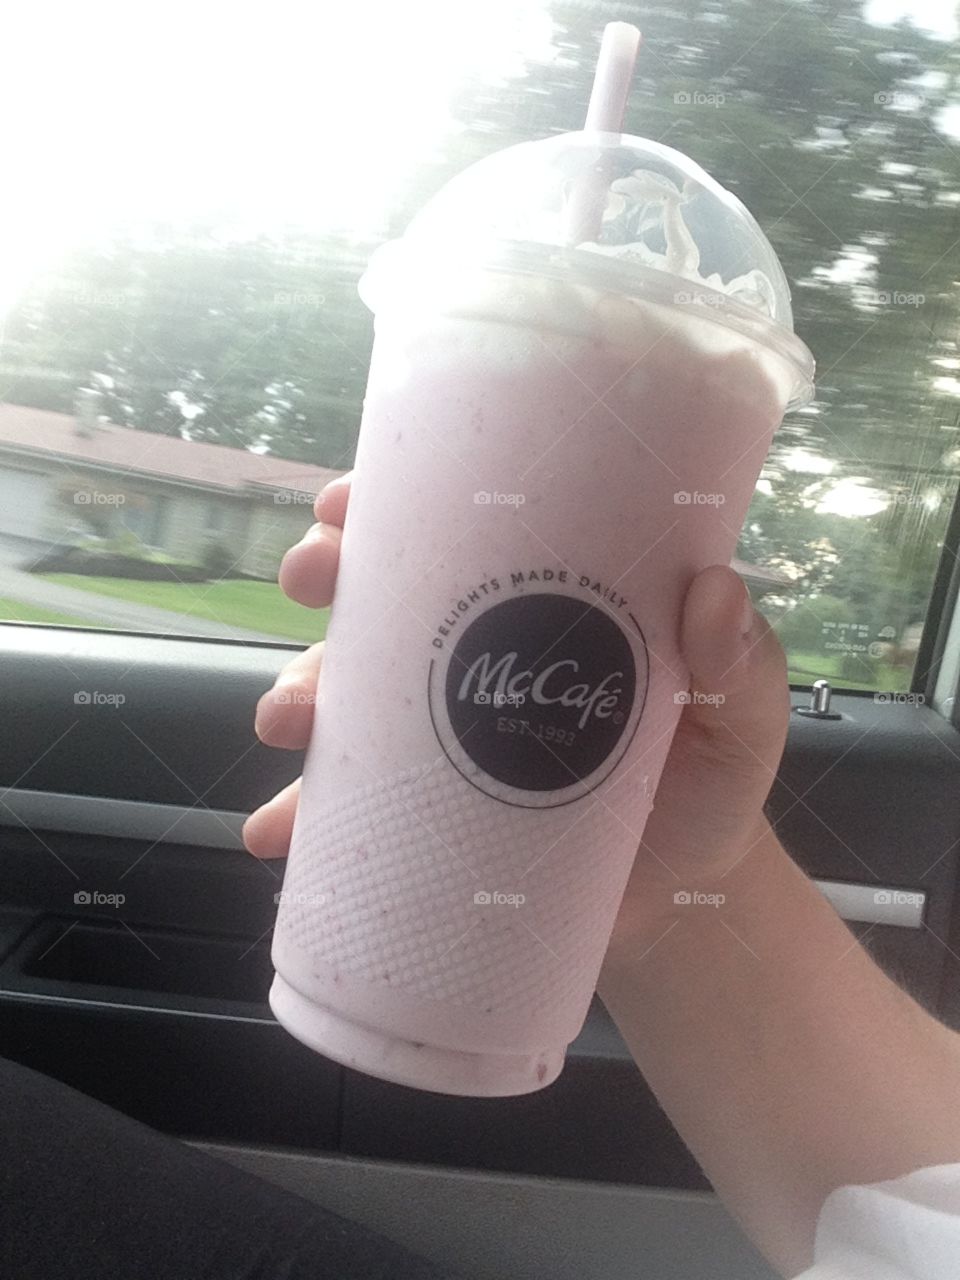 Mcdonalds milkshake